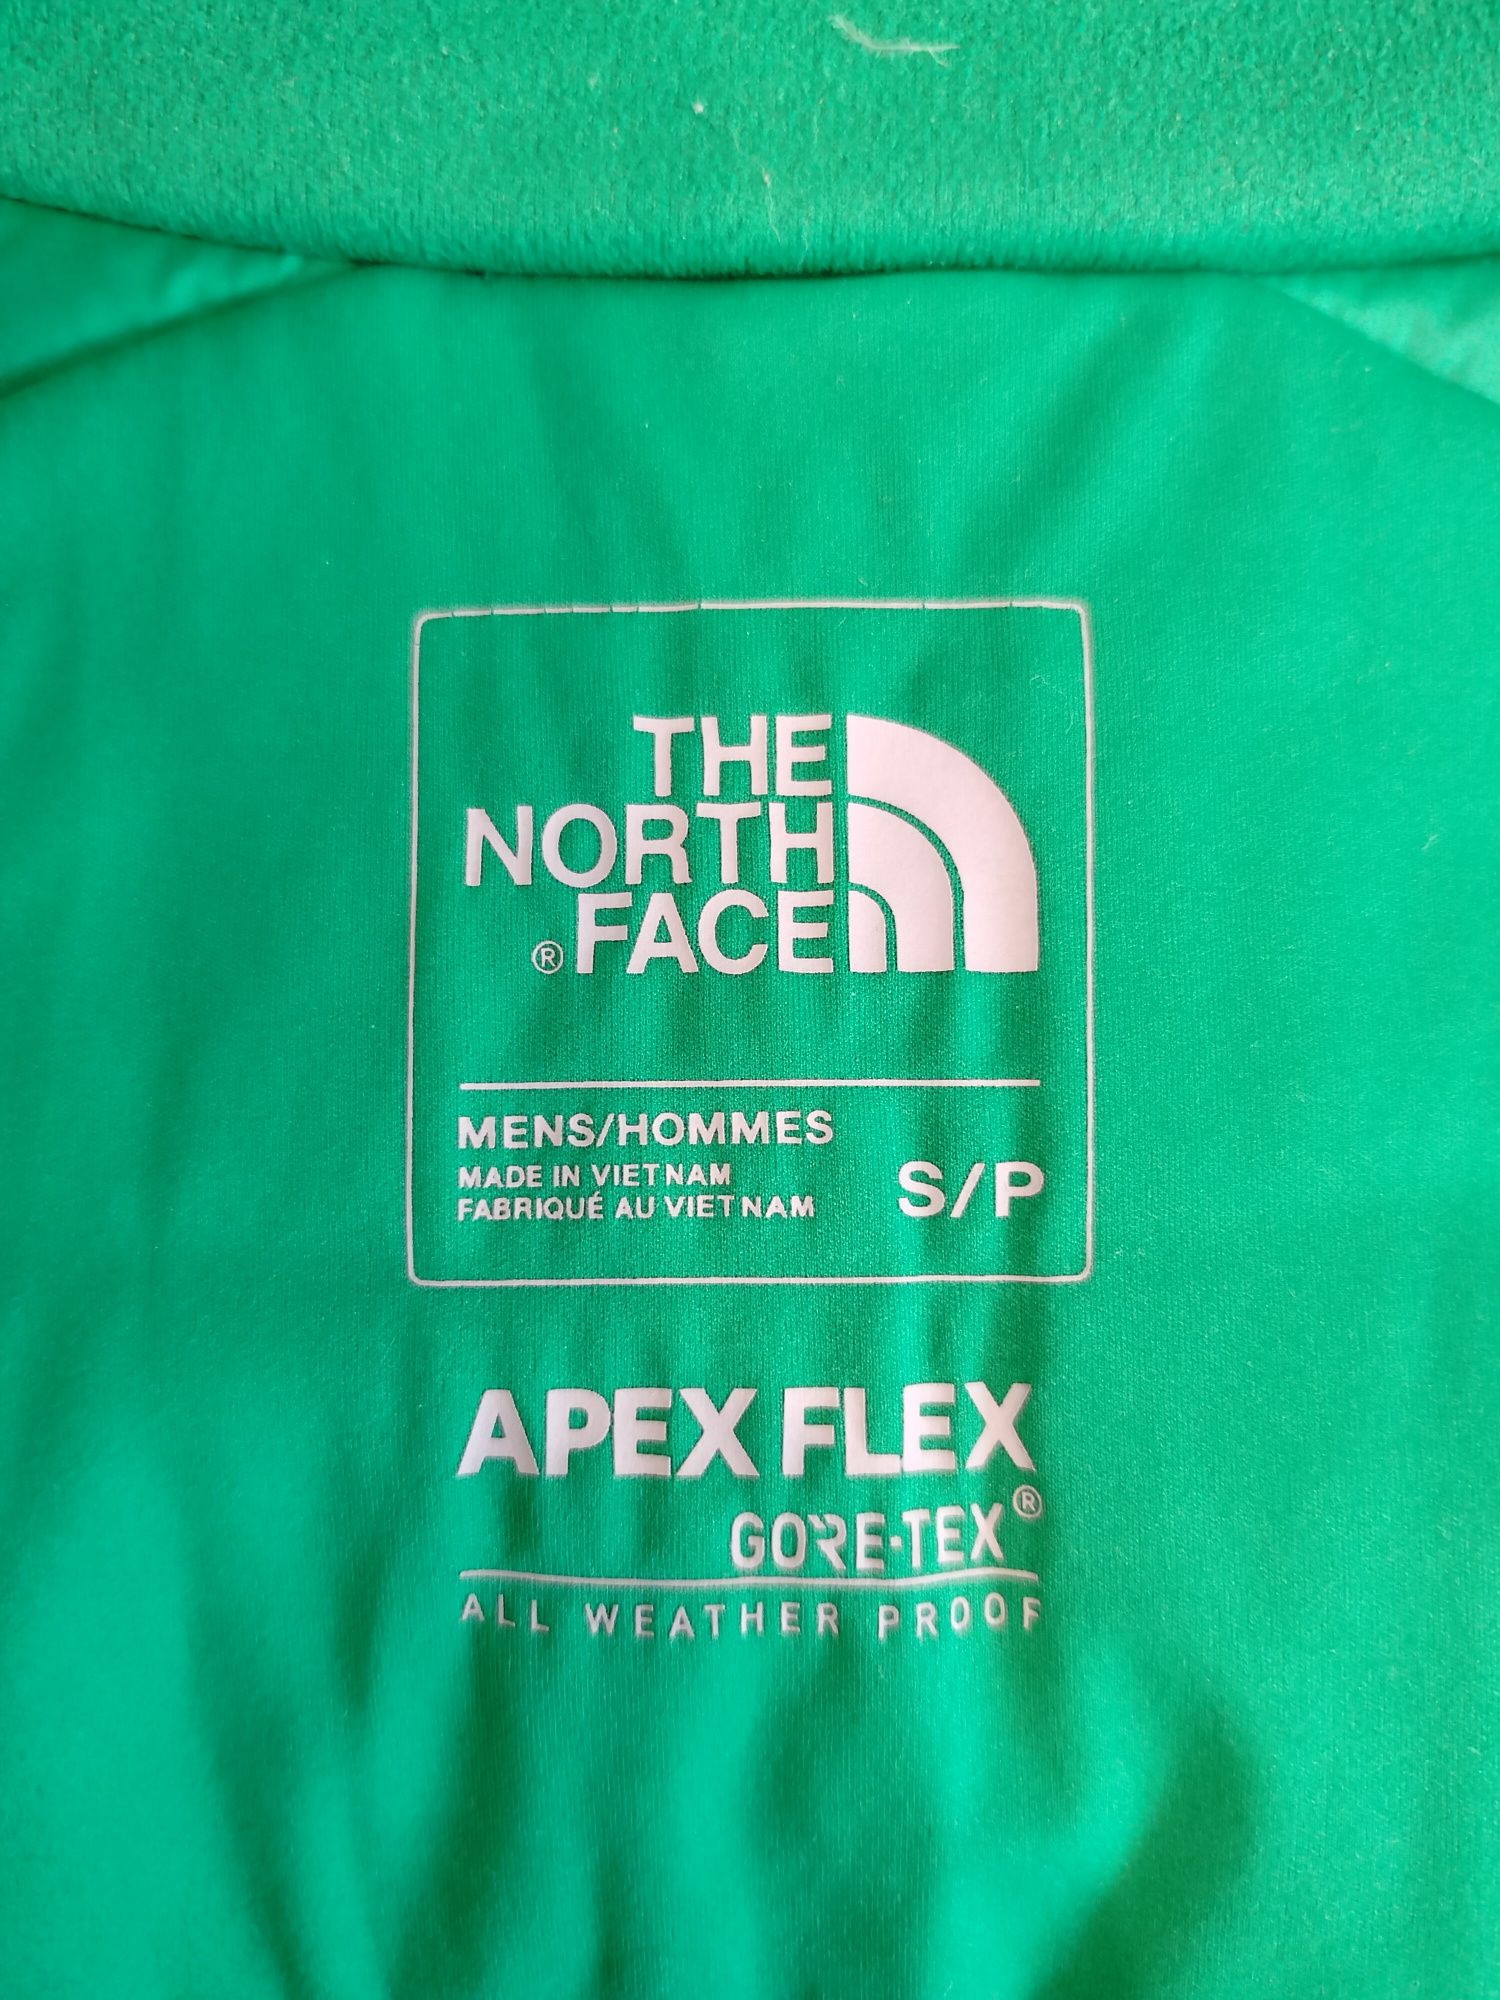 The North Face Apex flex GTX 2.0 rozmiar. S